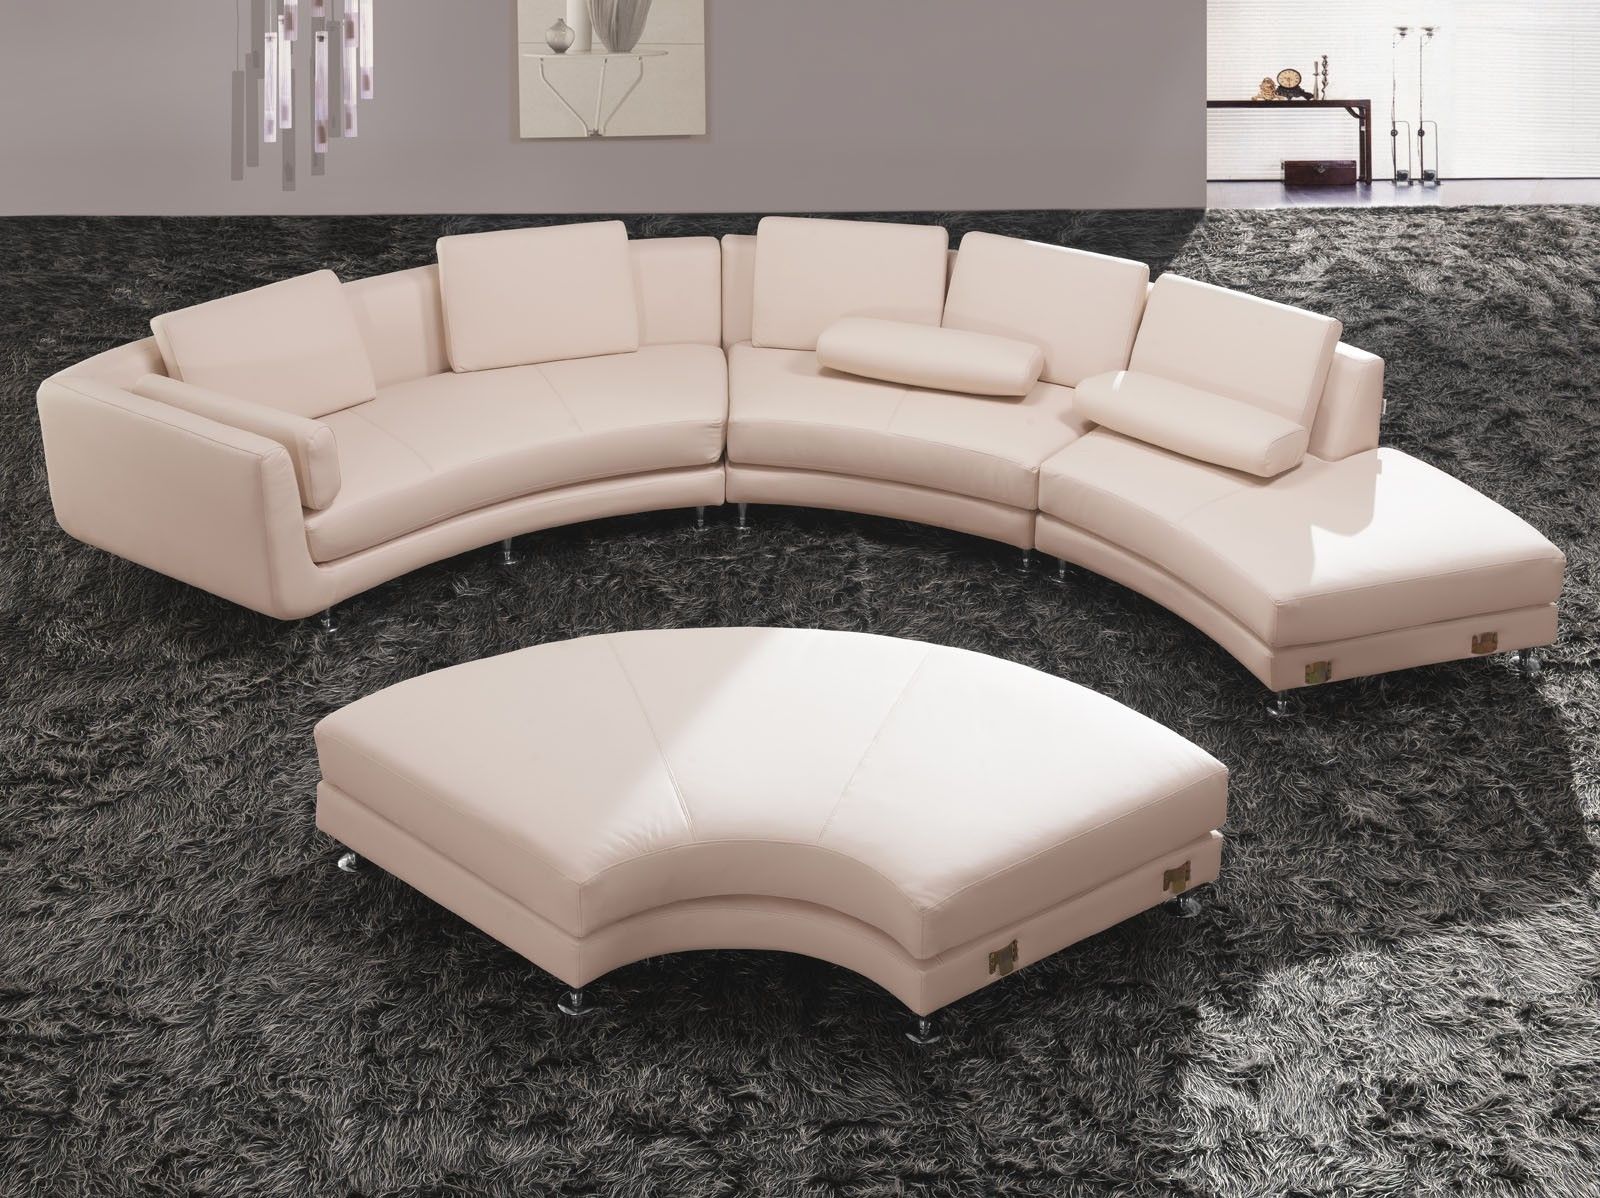 Sofas Center Circle Sectional Sofa Stirring Photo Concept Round Regarding Circular Sectional Sofa (View 7 of 12)